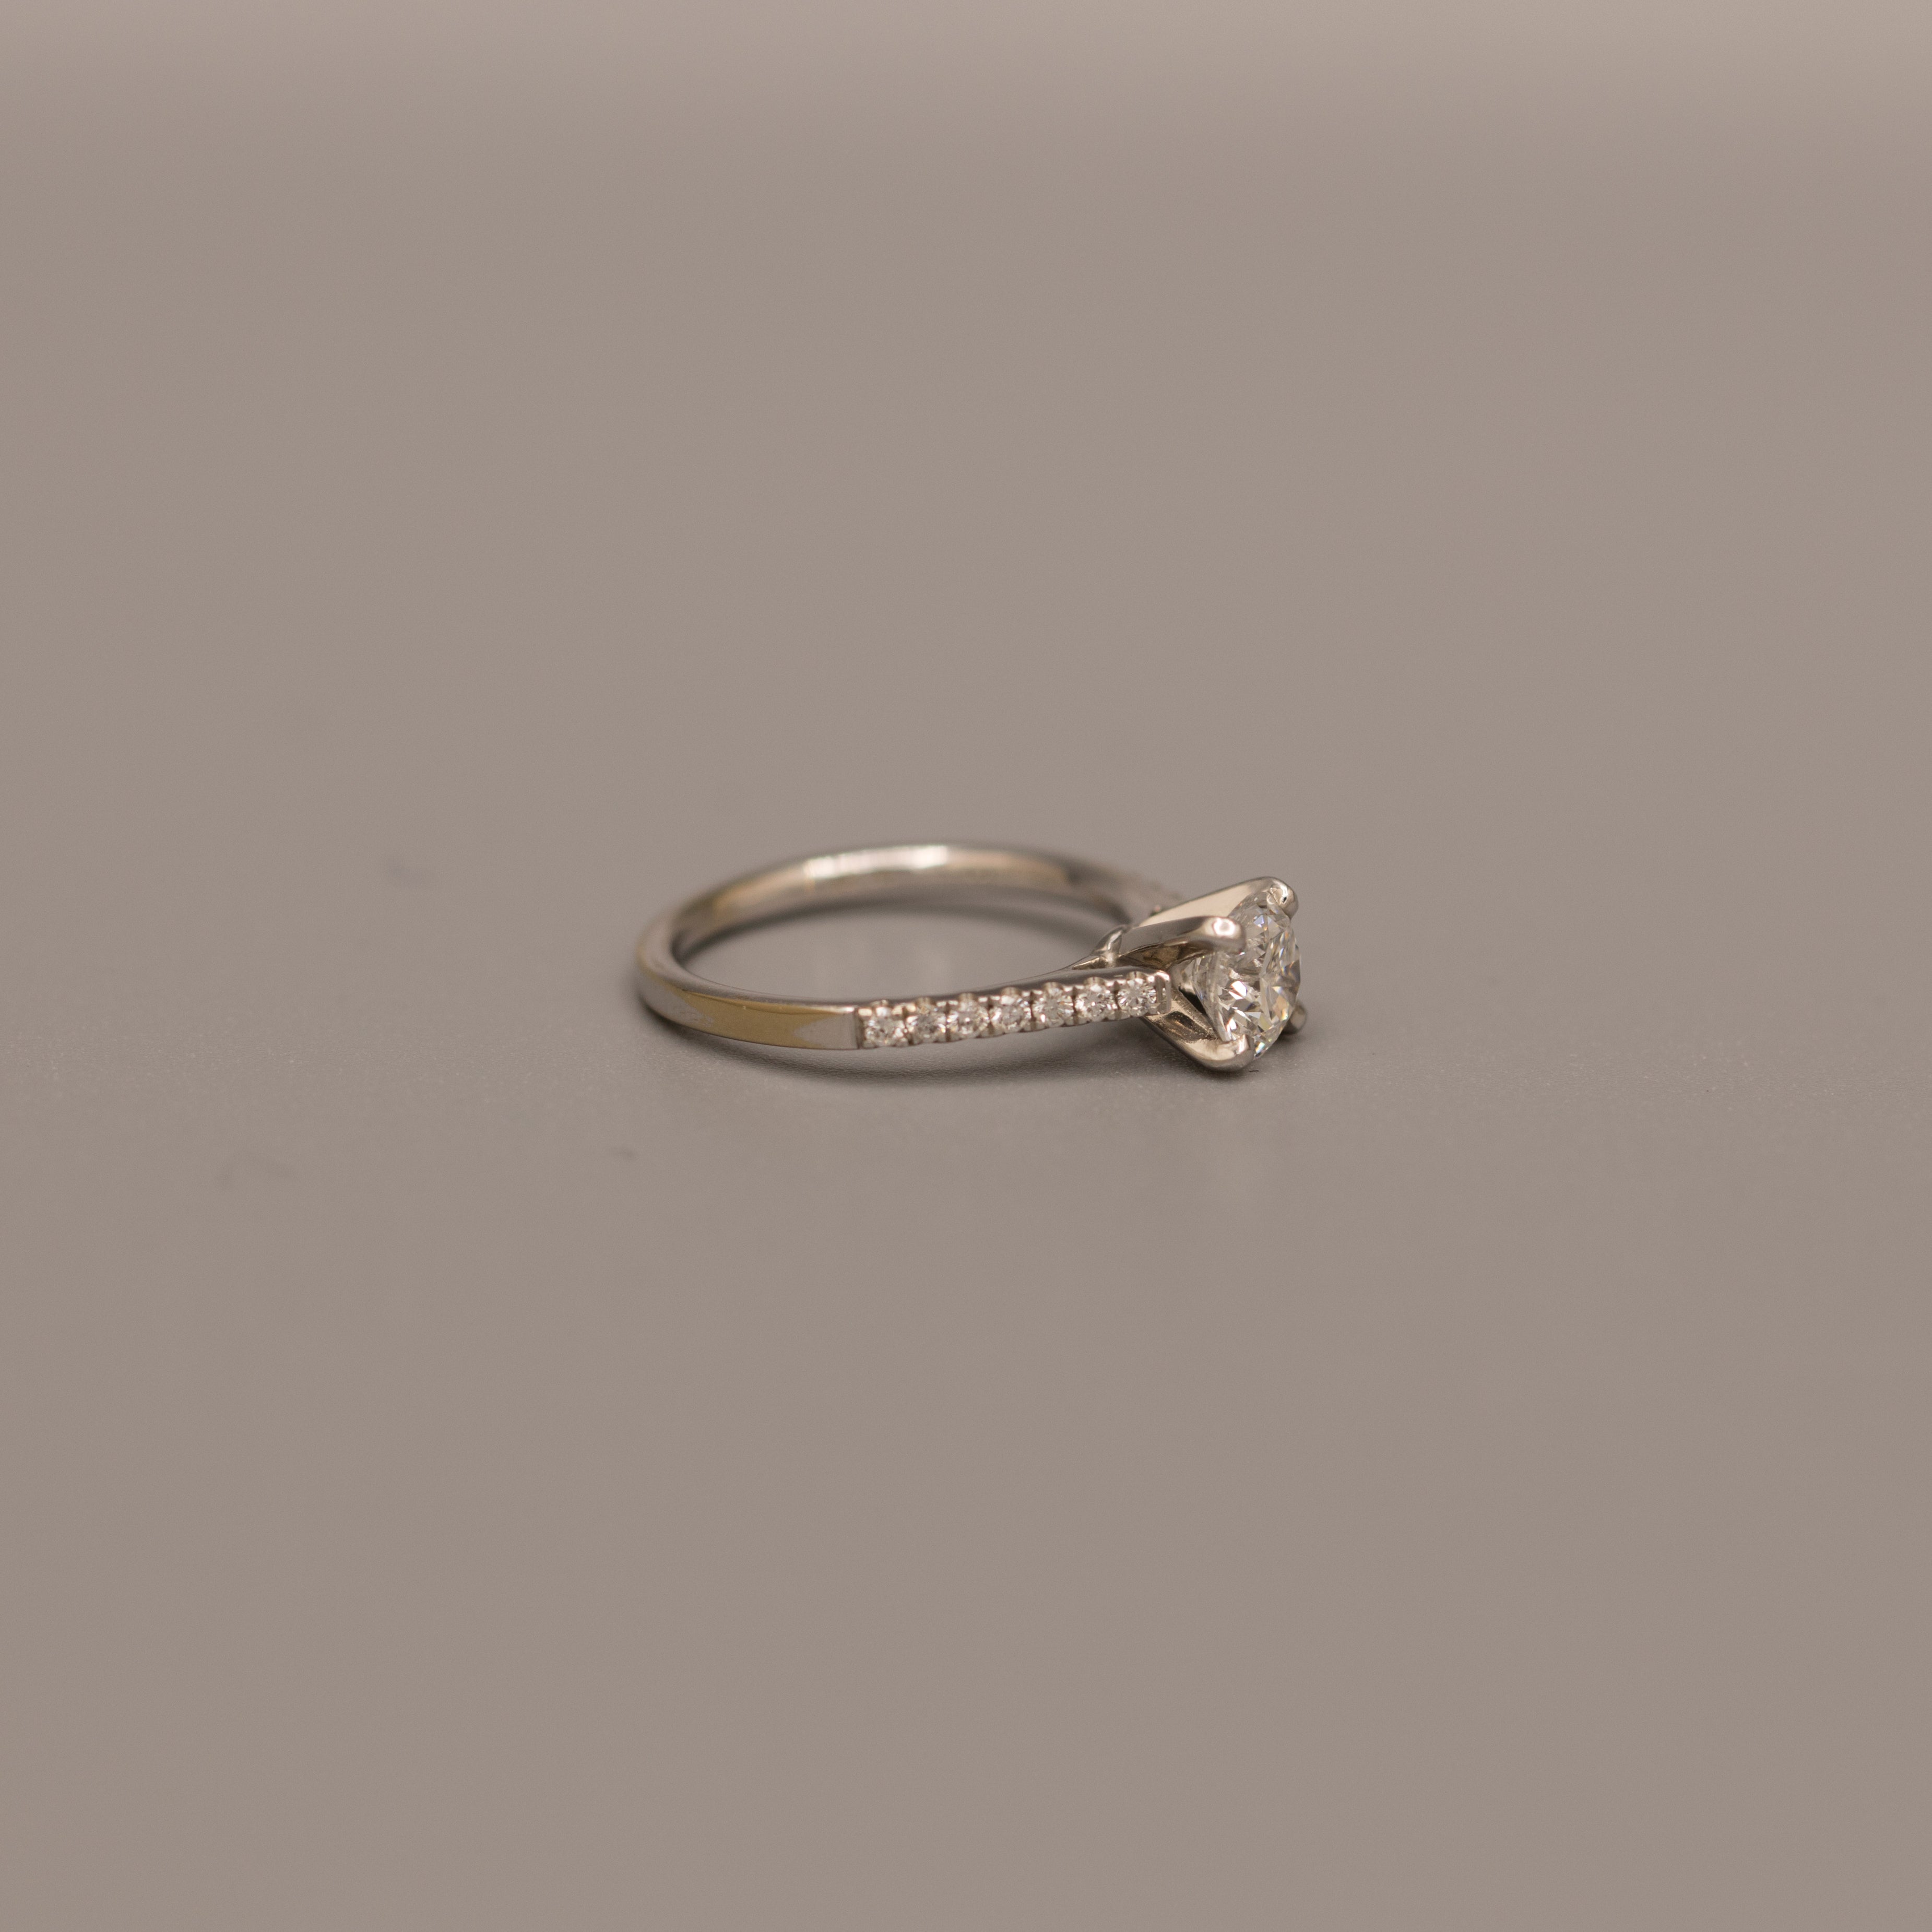 GIA Certified Lady's Diamond Engagement Ring, Round Brilliant Cut Diamond 0.72 carat VS1 F